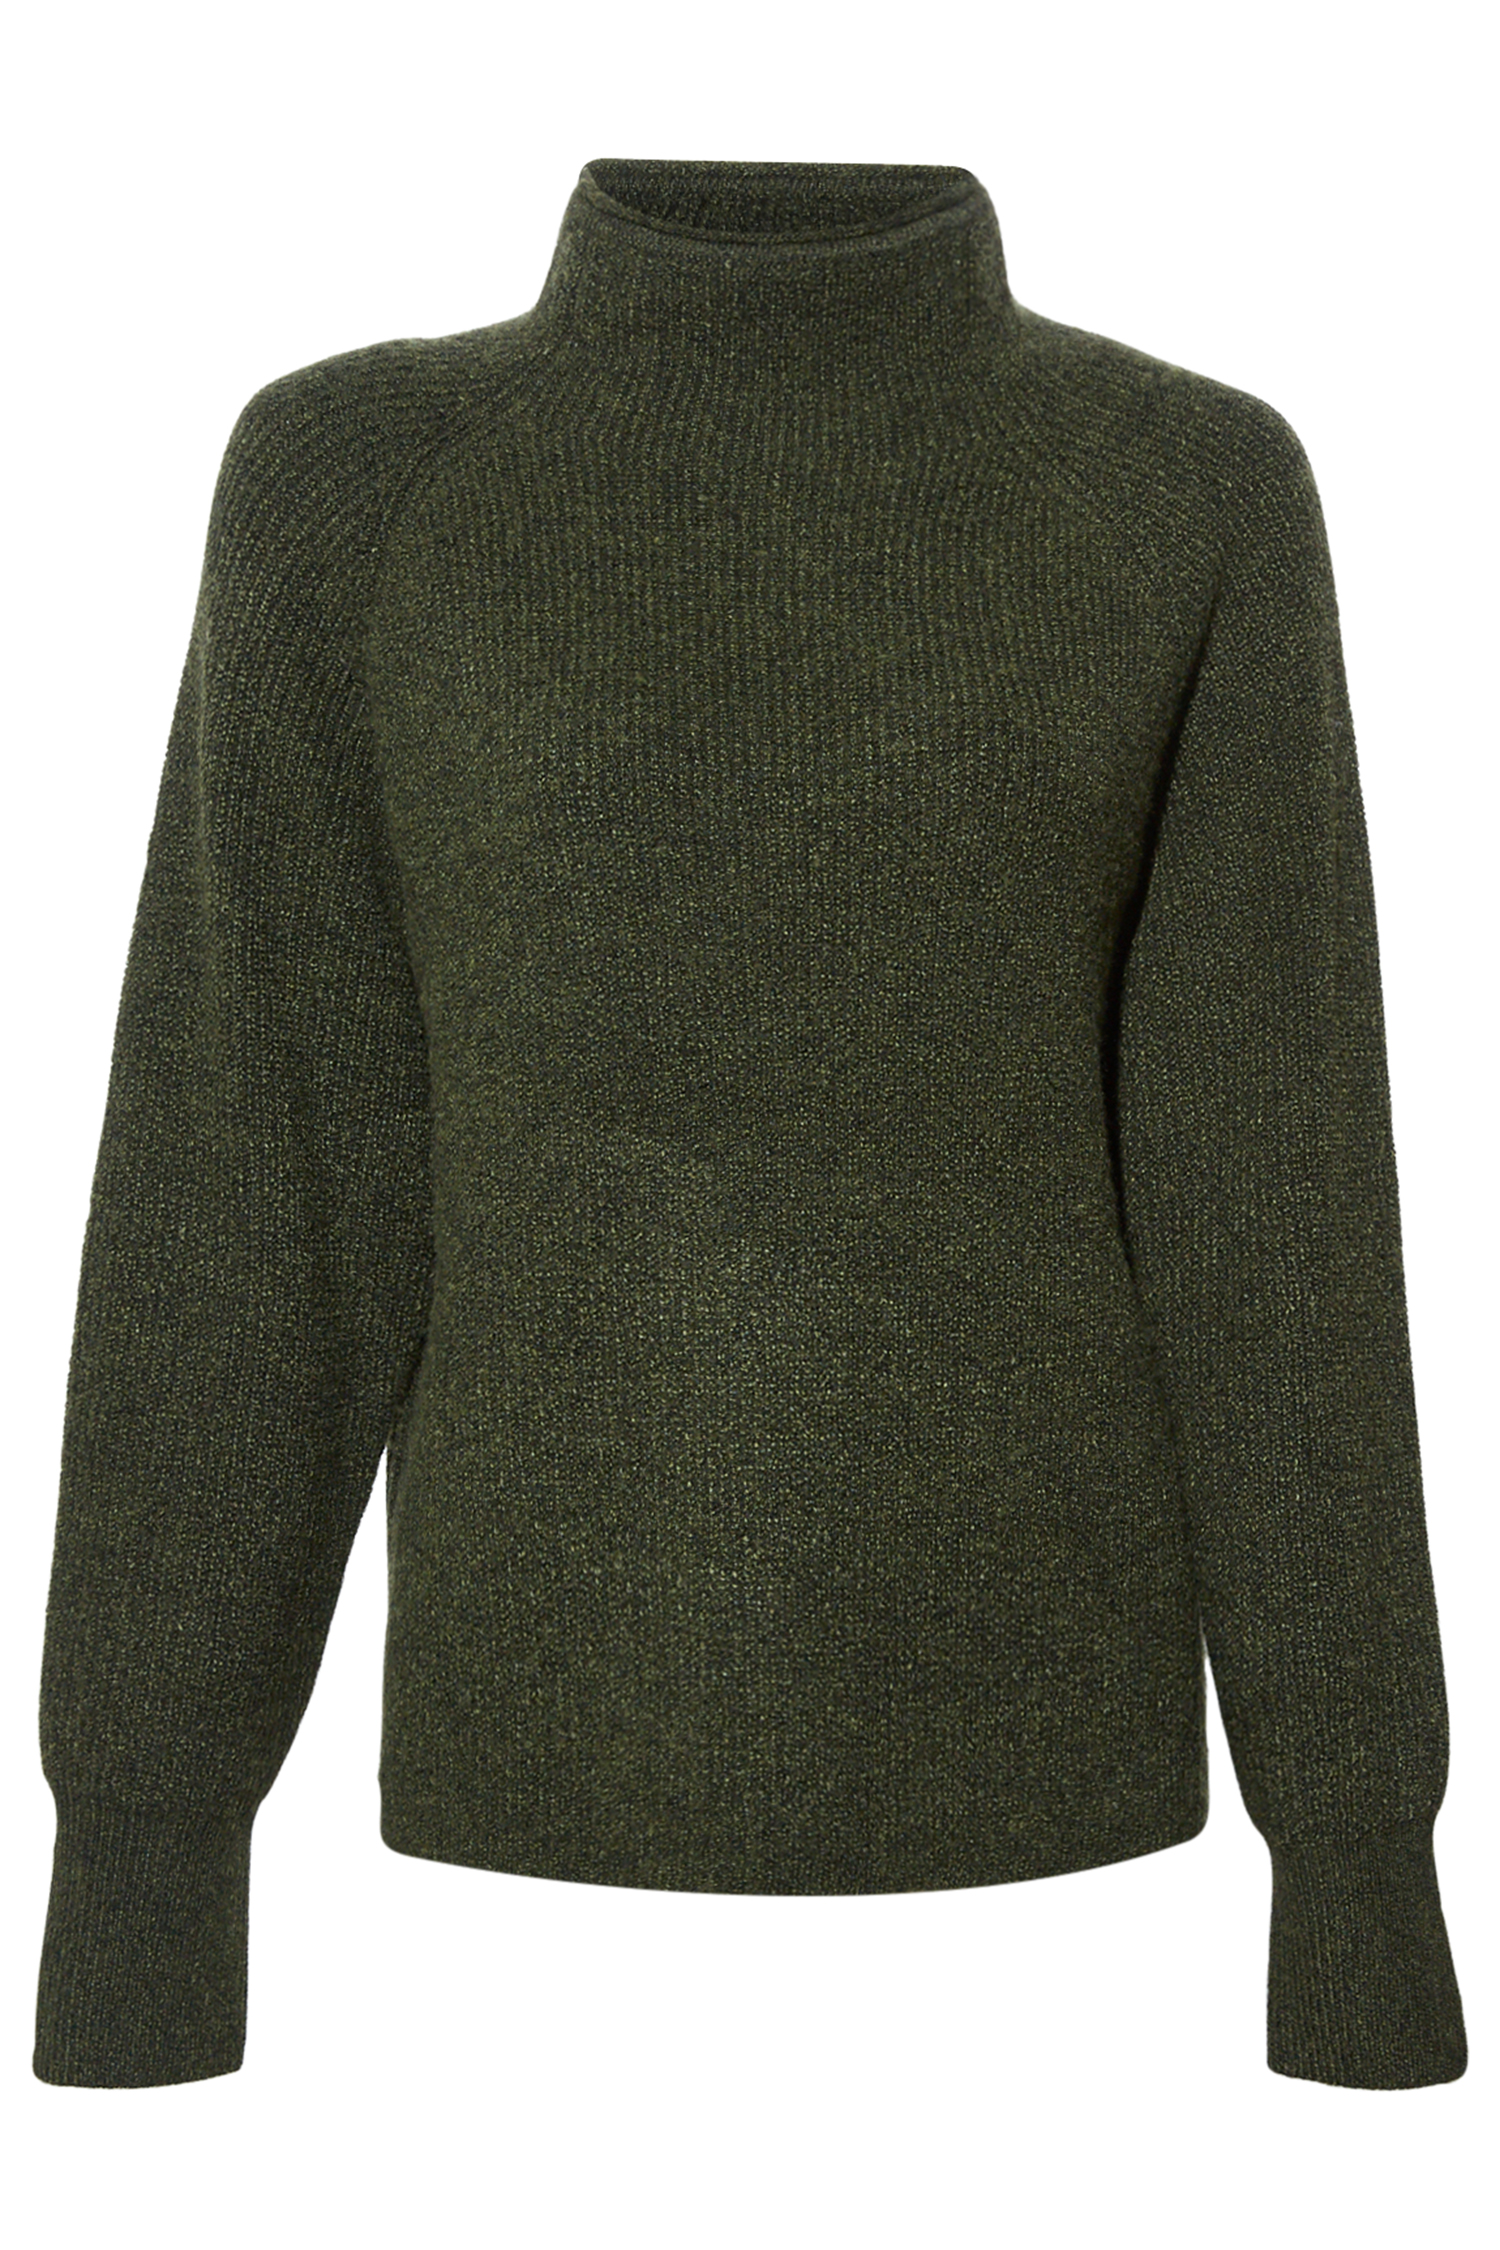 Thread & Supply Nini Sweater